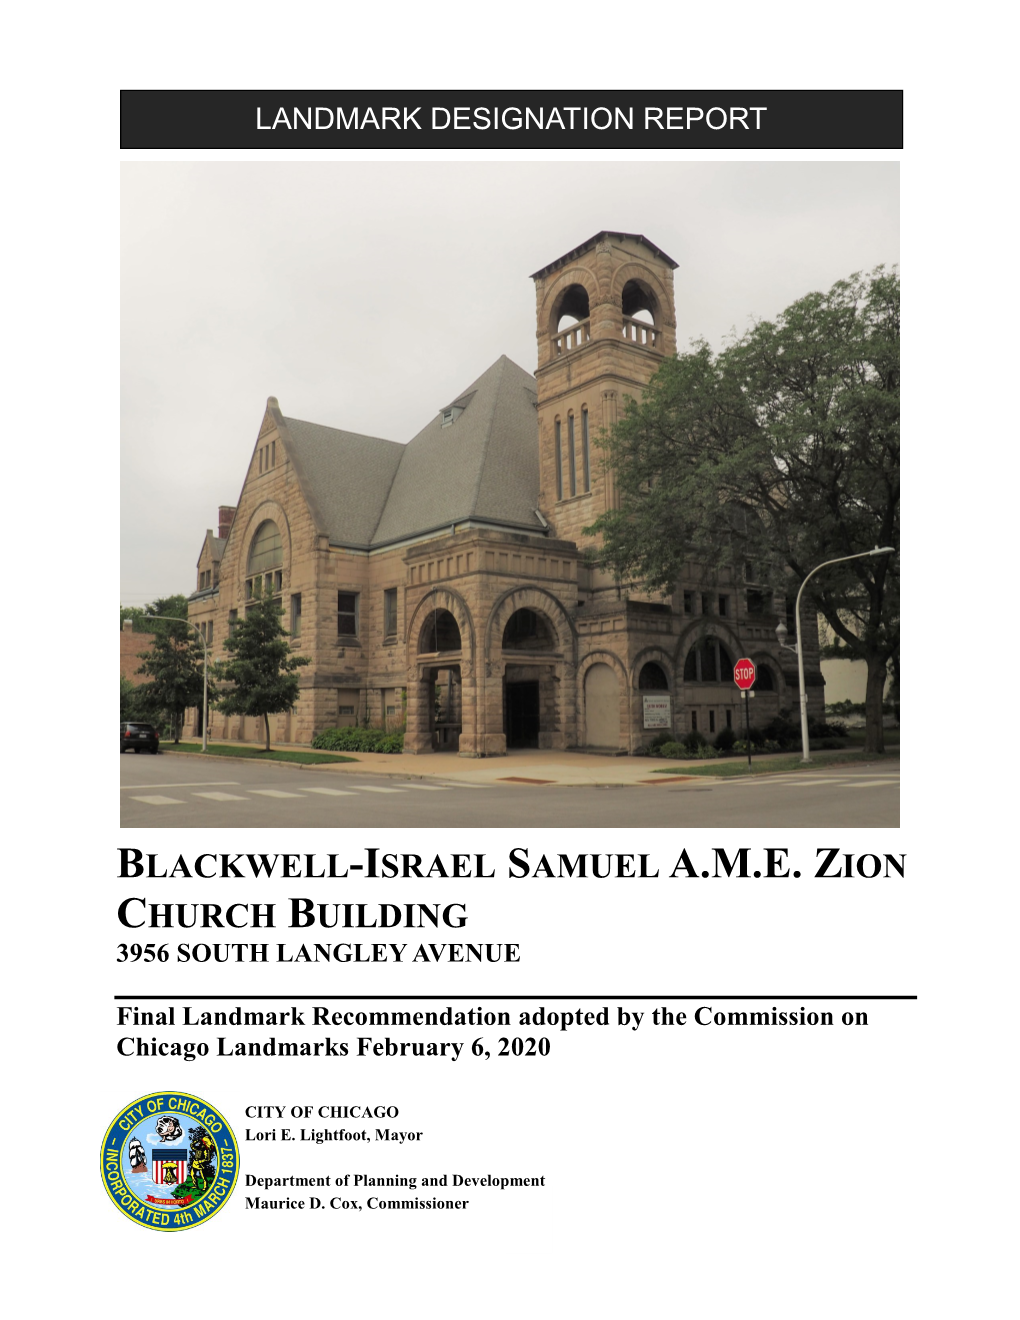 Blackwell-Israel Samuel A.M.E. Zion Church Building 3956 South Langley Avenue